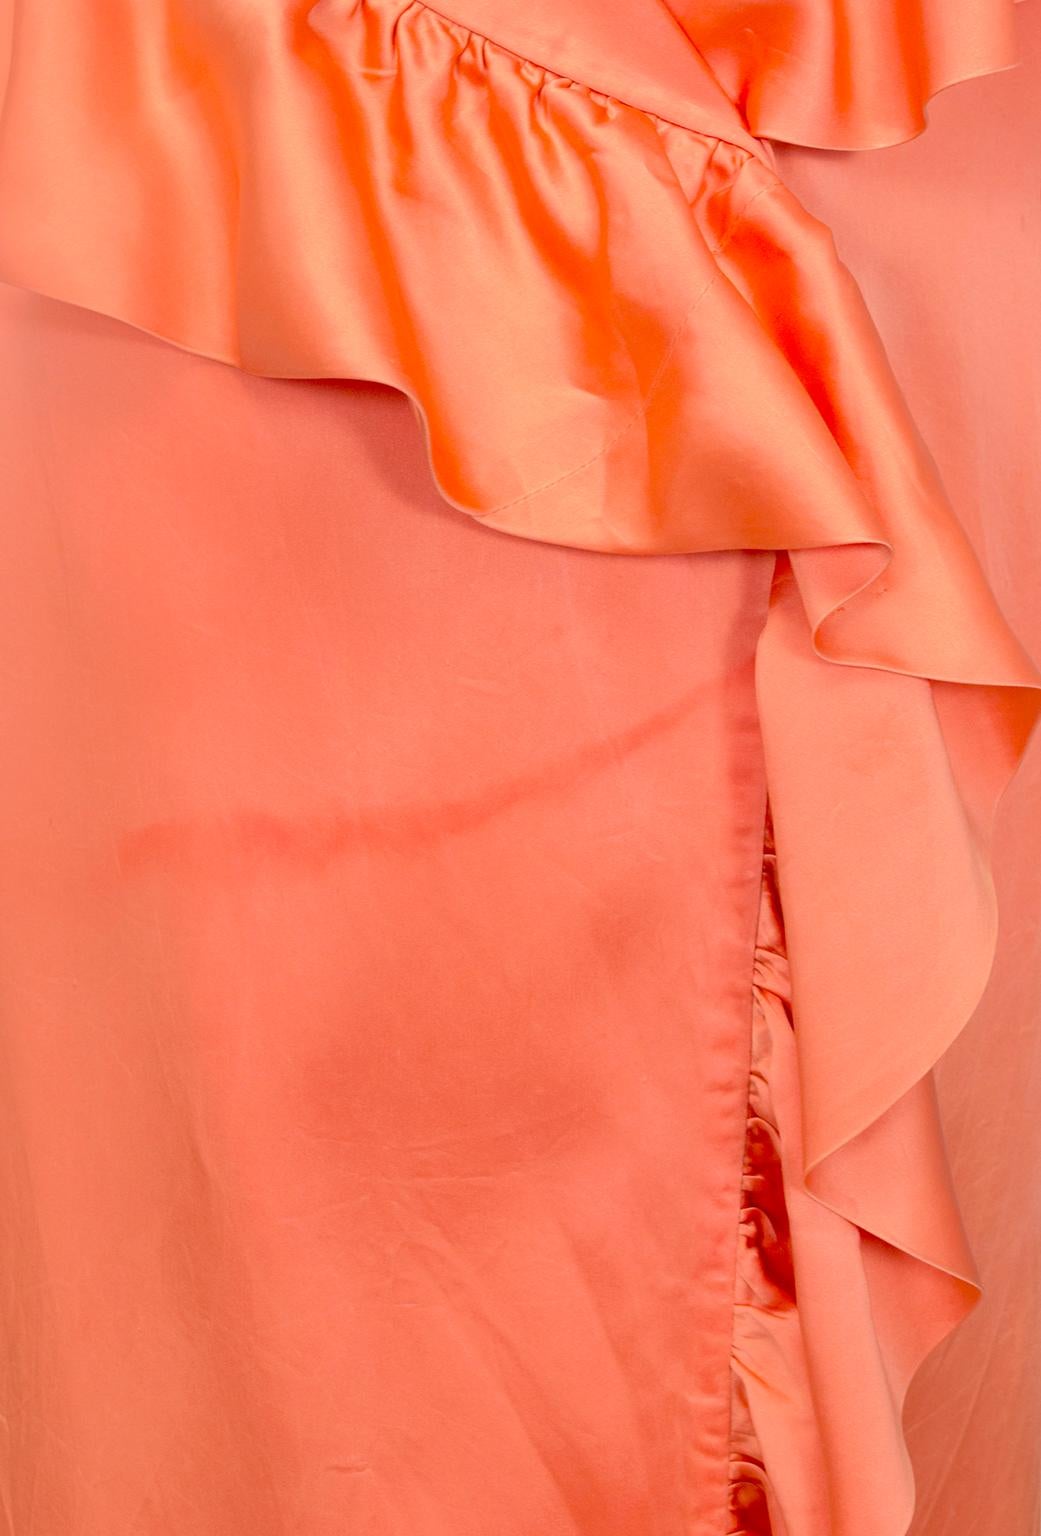 Tangerine Satin Sleeveless Inverness Coat Dress w Cascading Ruffles–O/S, 1960s For Sale 3